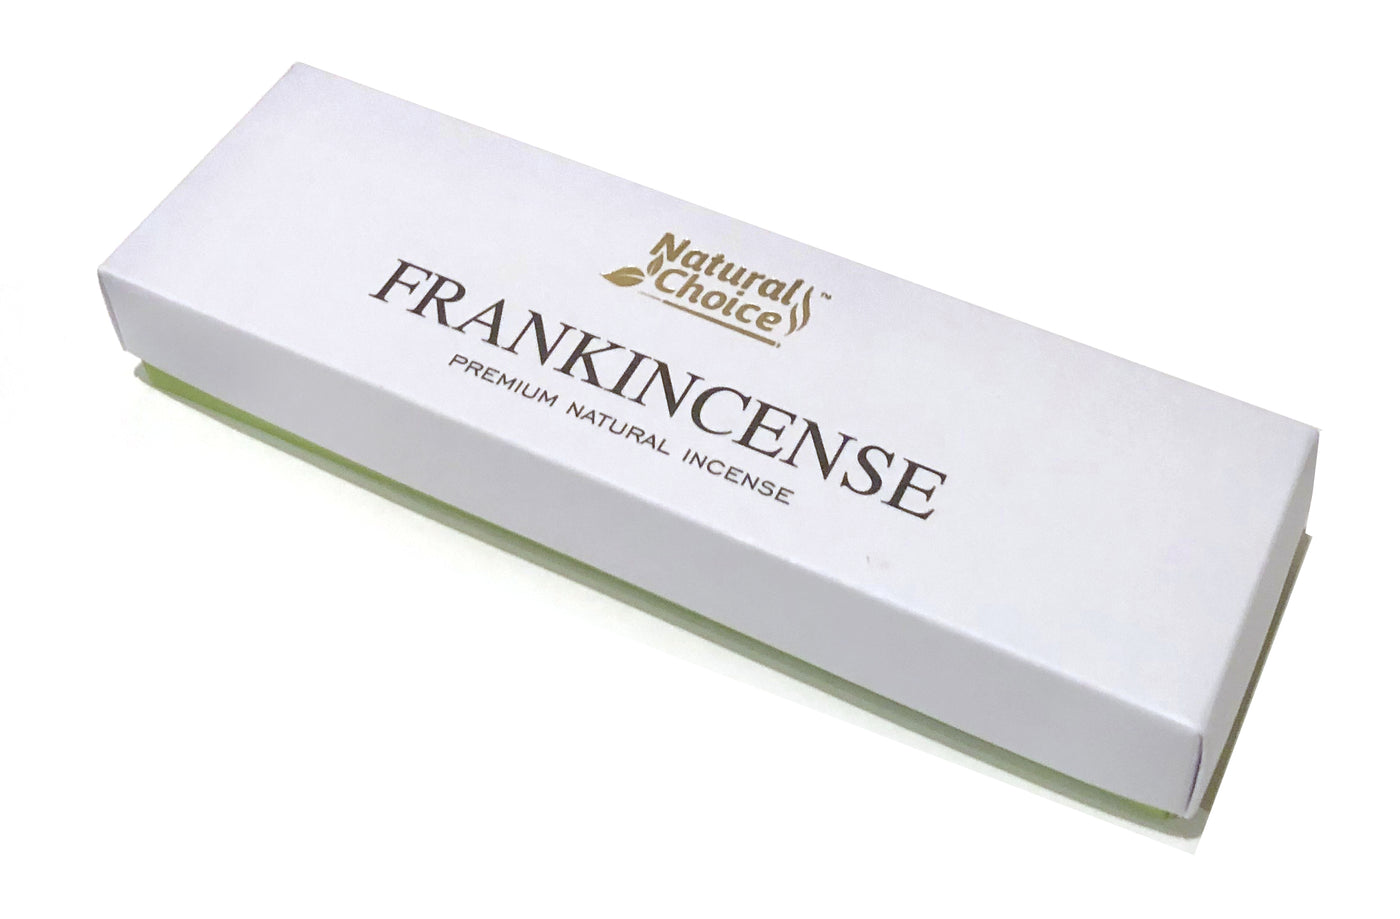 Frankincense Premium Natural Incense Gift Box with Incense Burner (150 sticks)